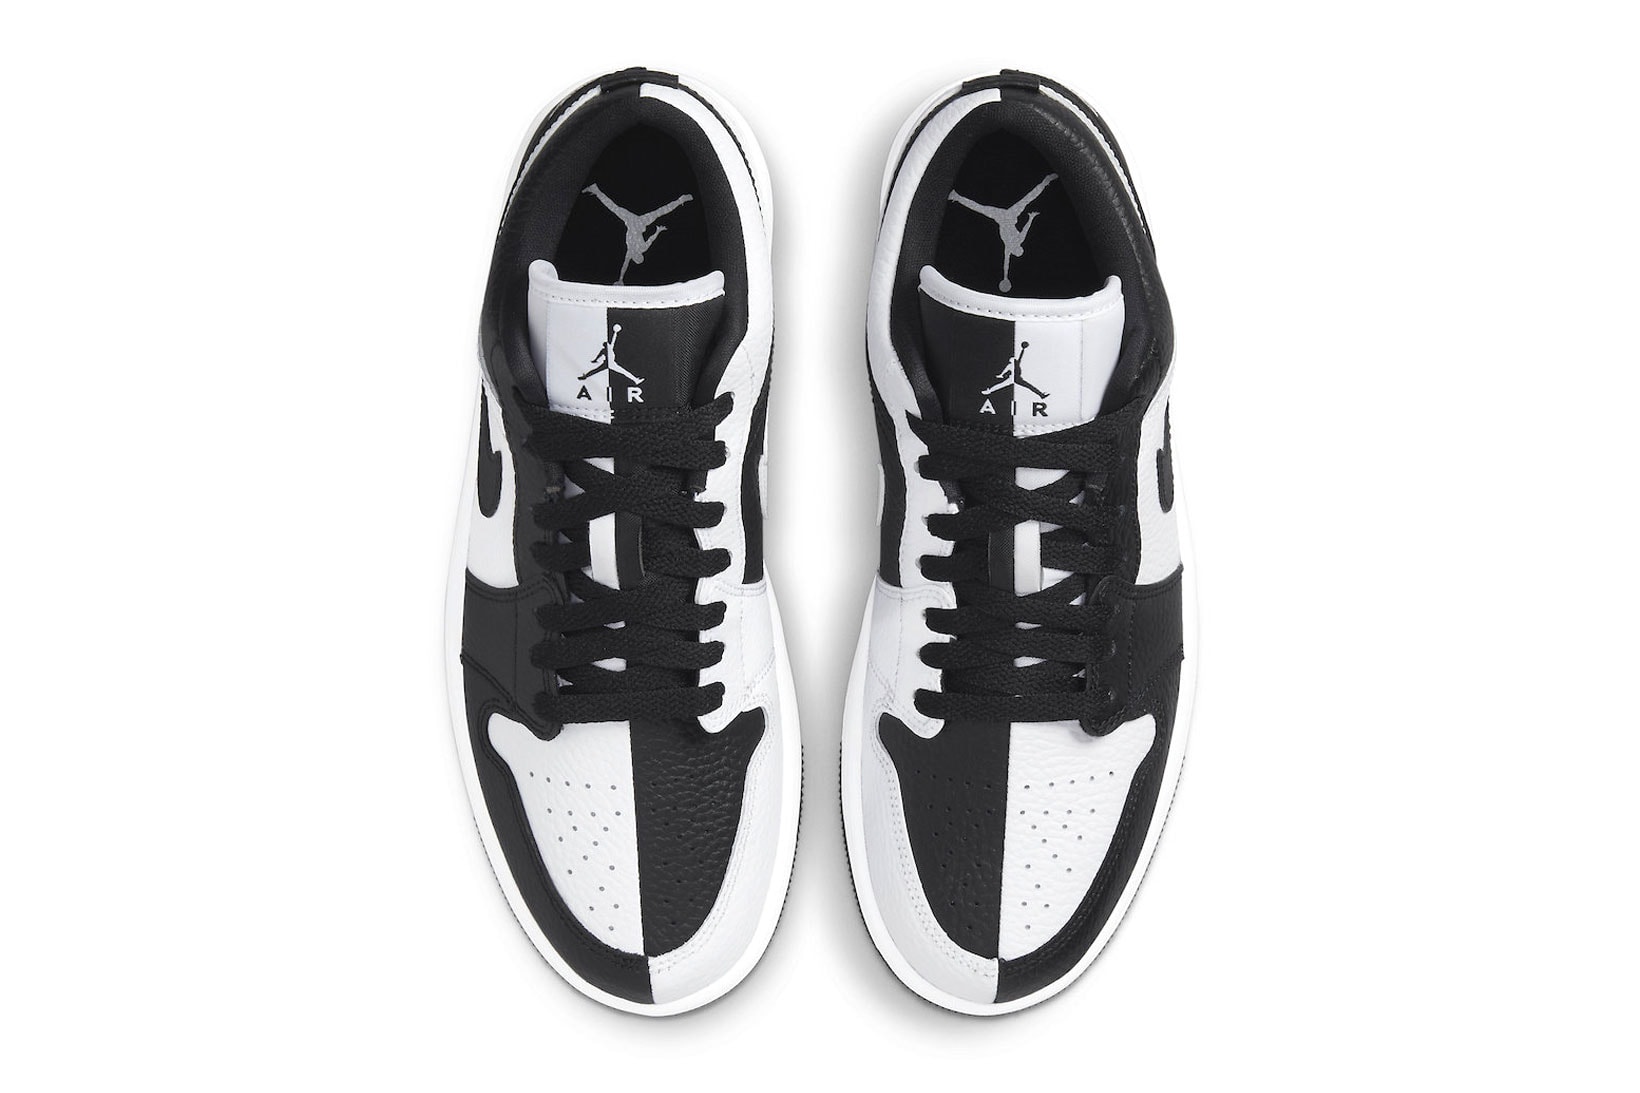 Nike Air Jordan 1 Low "Homage" Split Black White Official Images Release Info